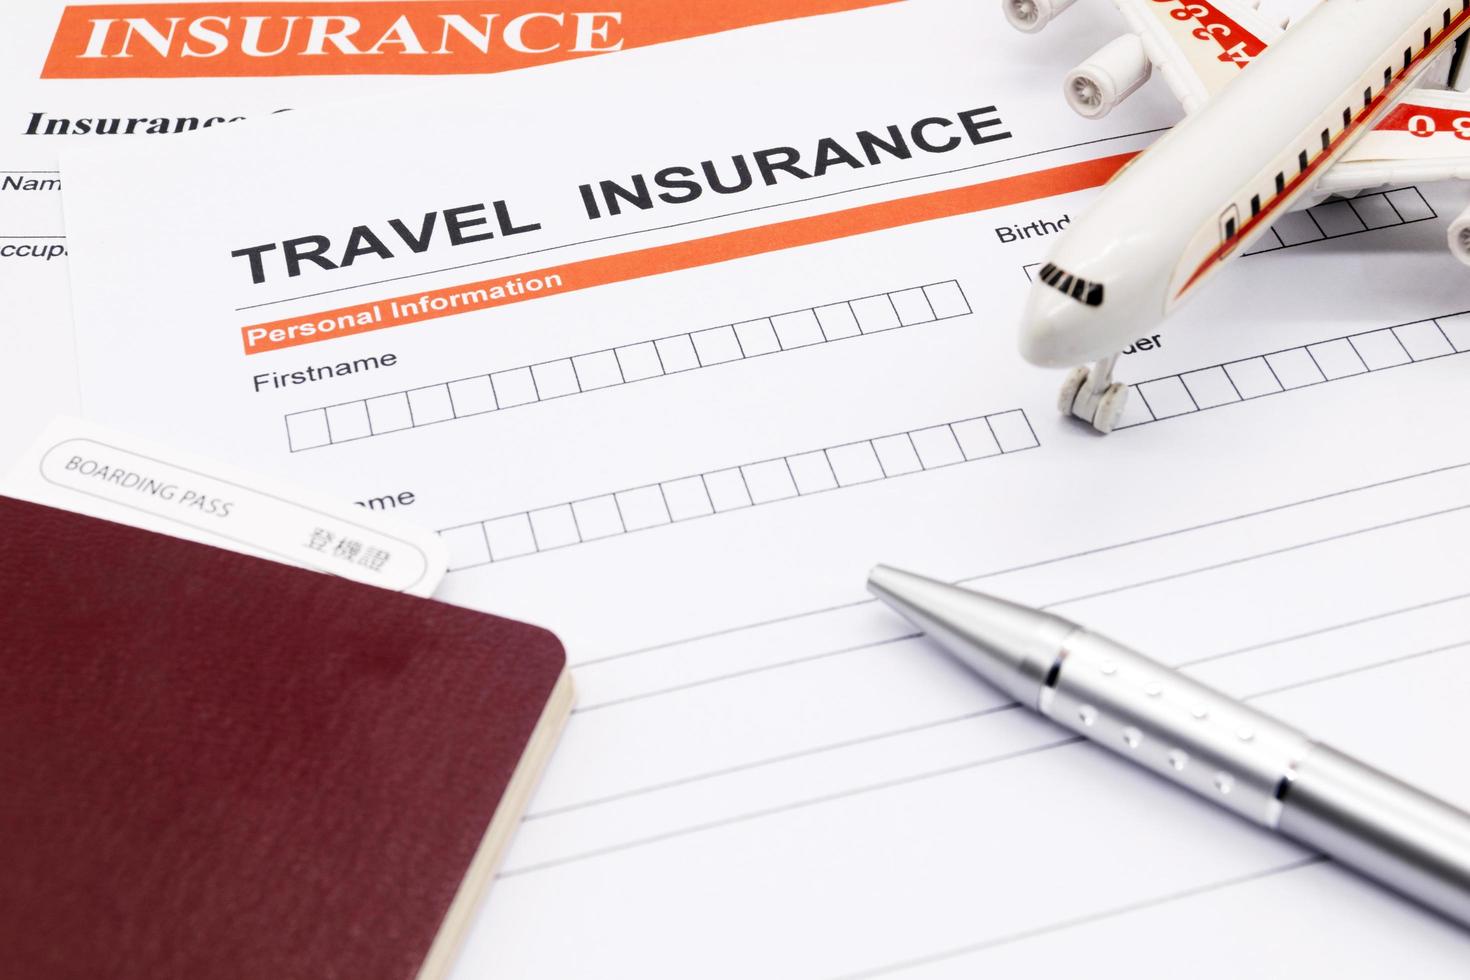 Travel insurance application form photo